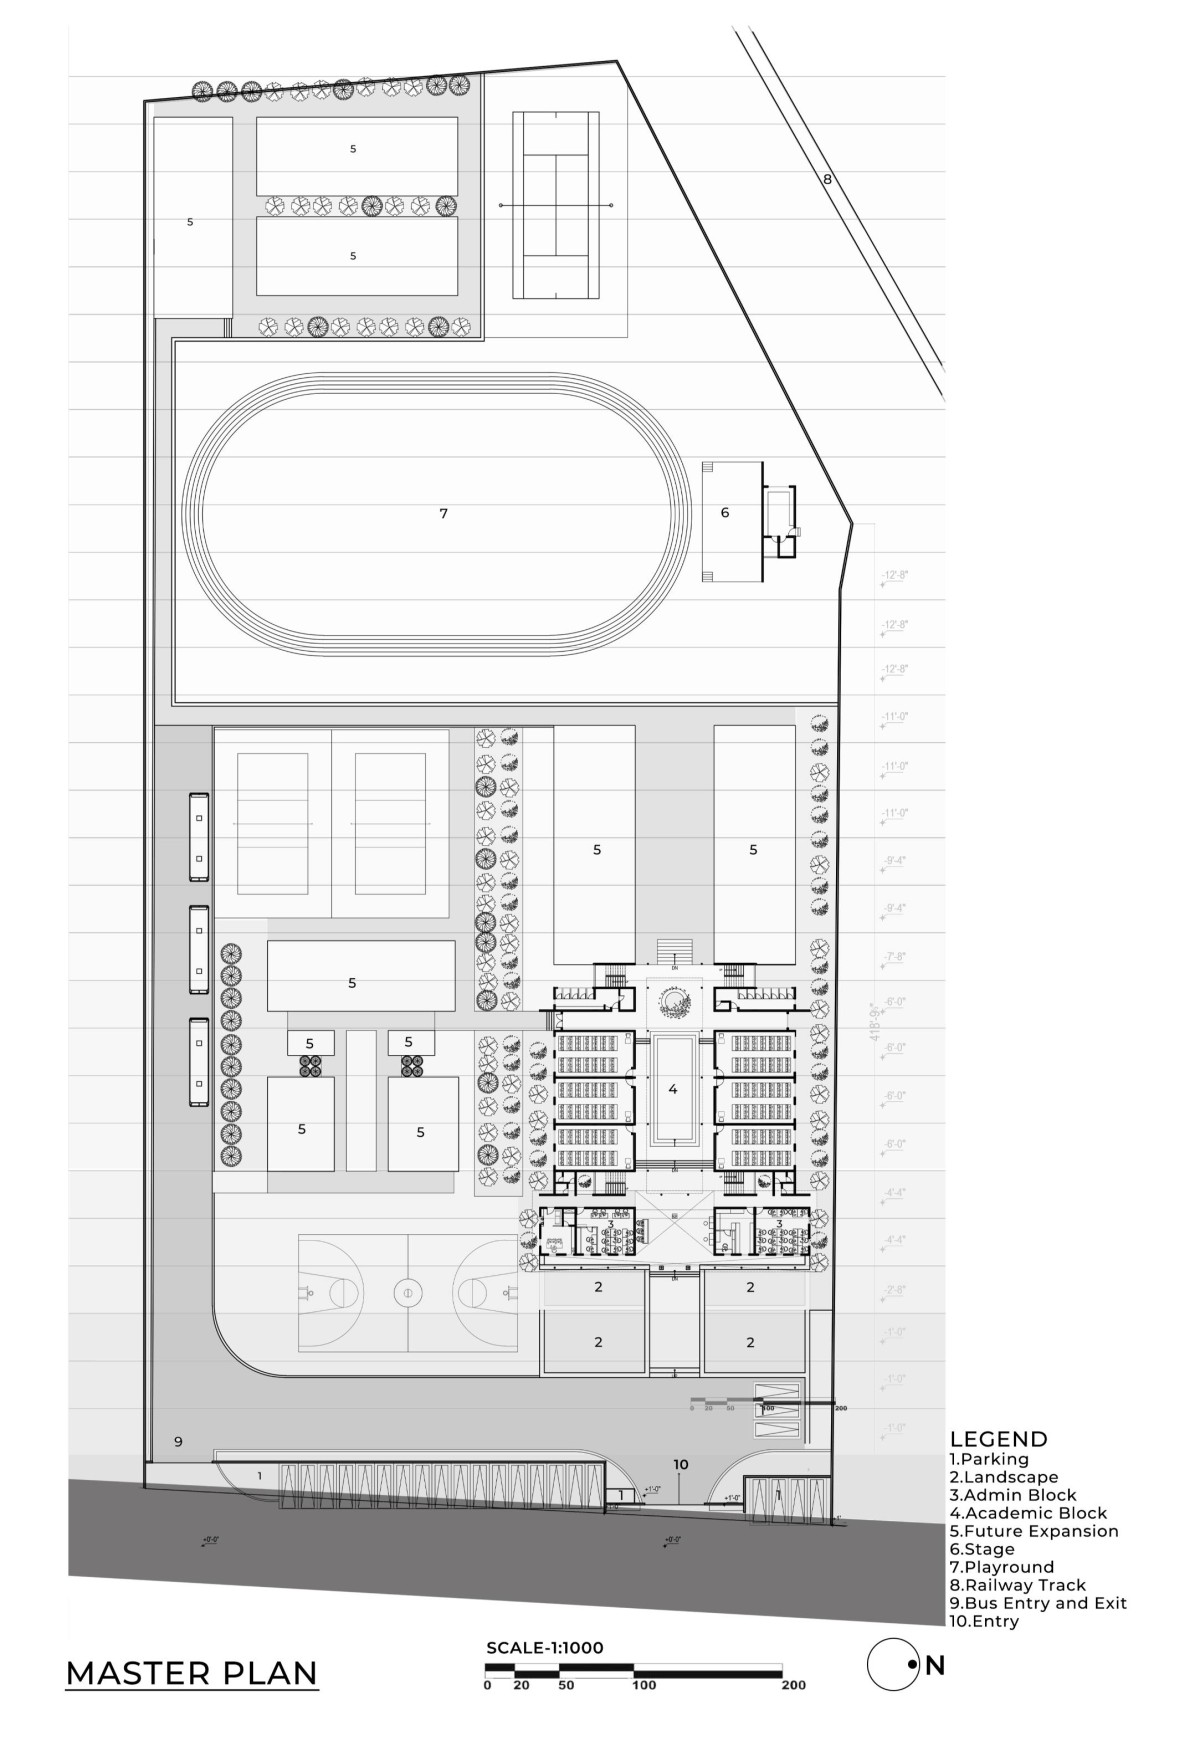 Master Plan of Vidyakula International School by Sudaiva Studio